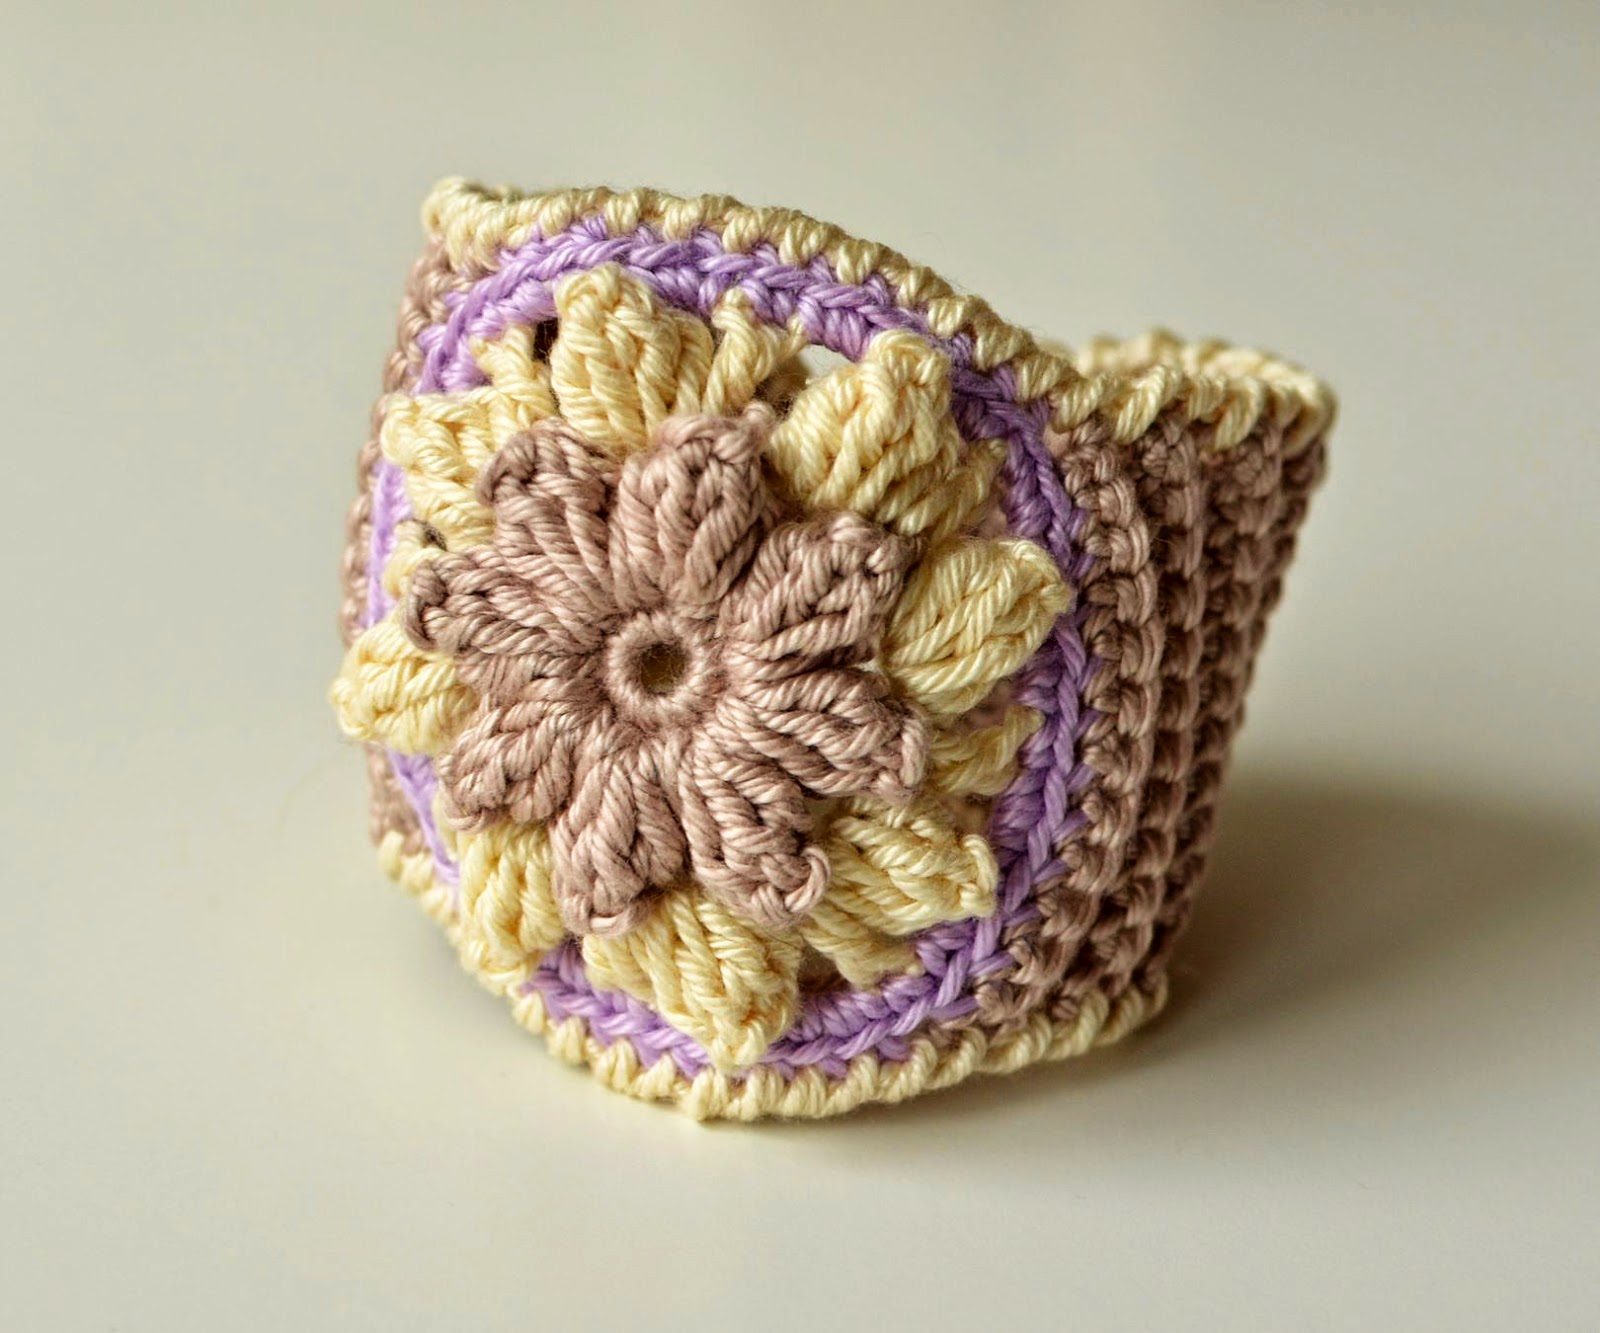 Crocheted Bracelet In An Hour? That's Easy! | LillaBjörn's Crochet World